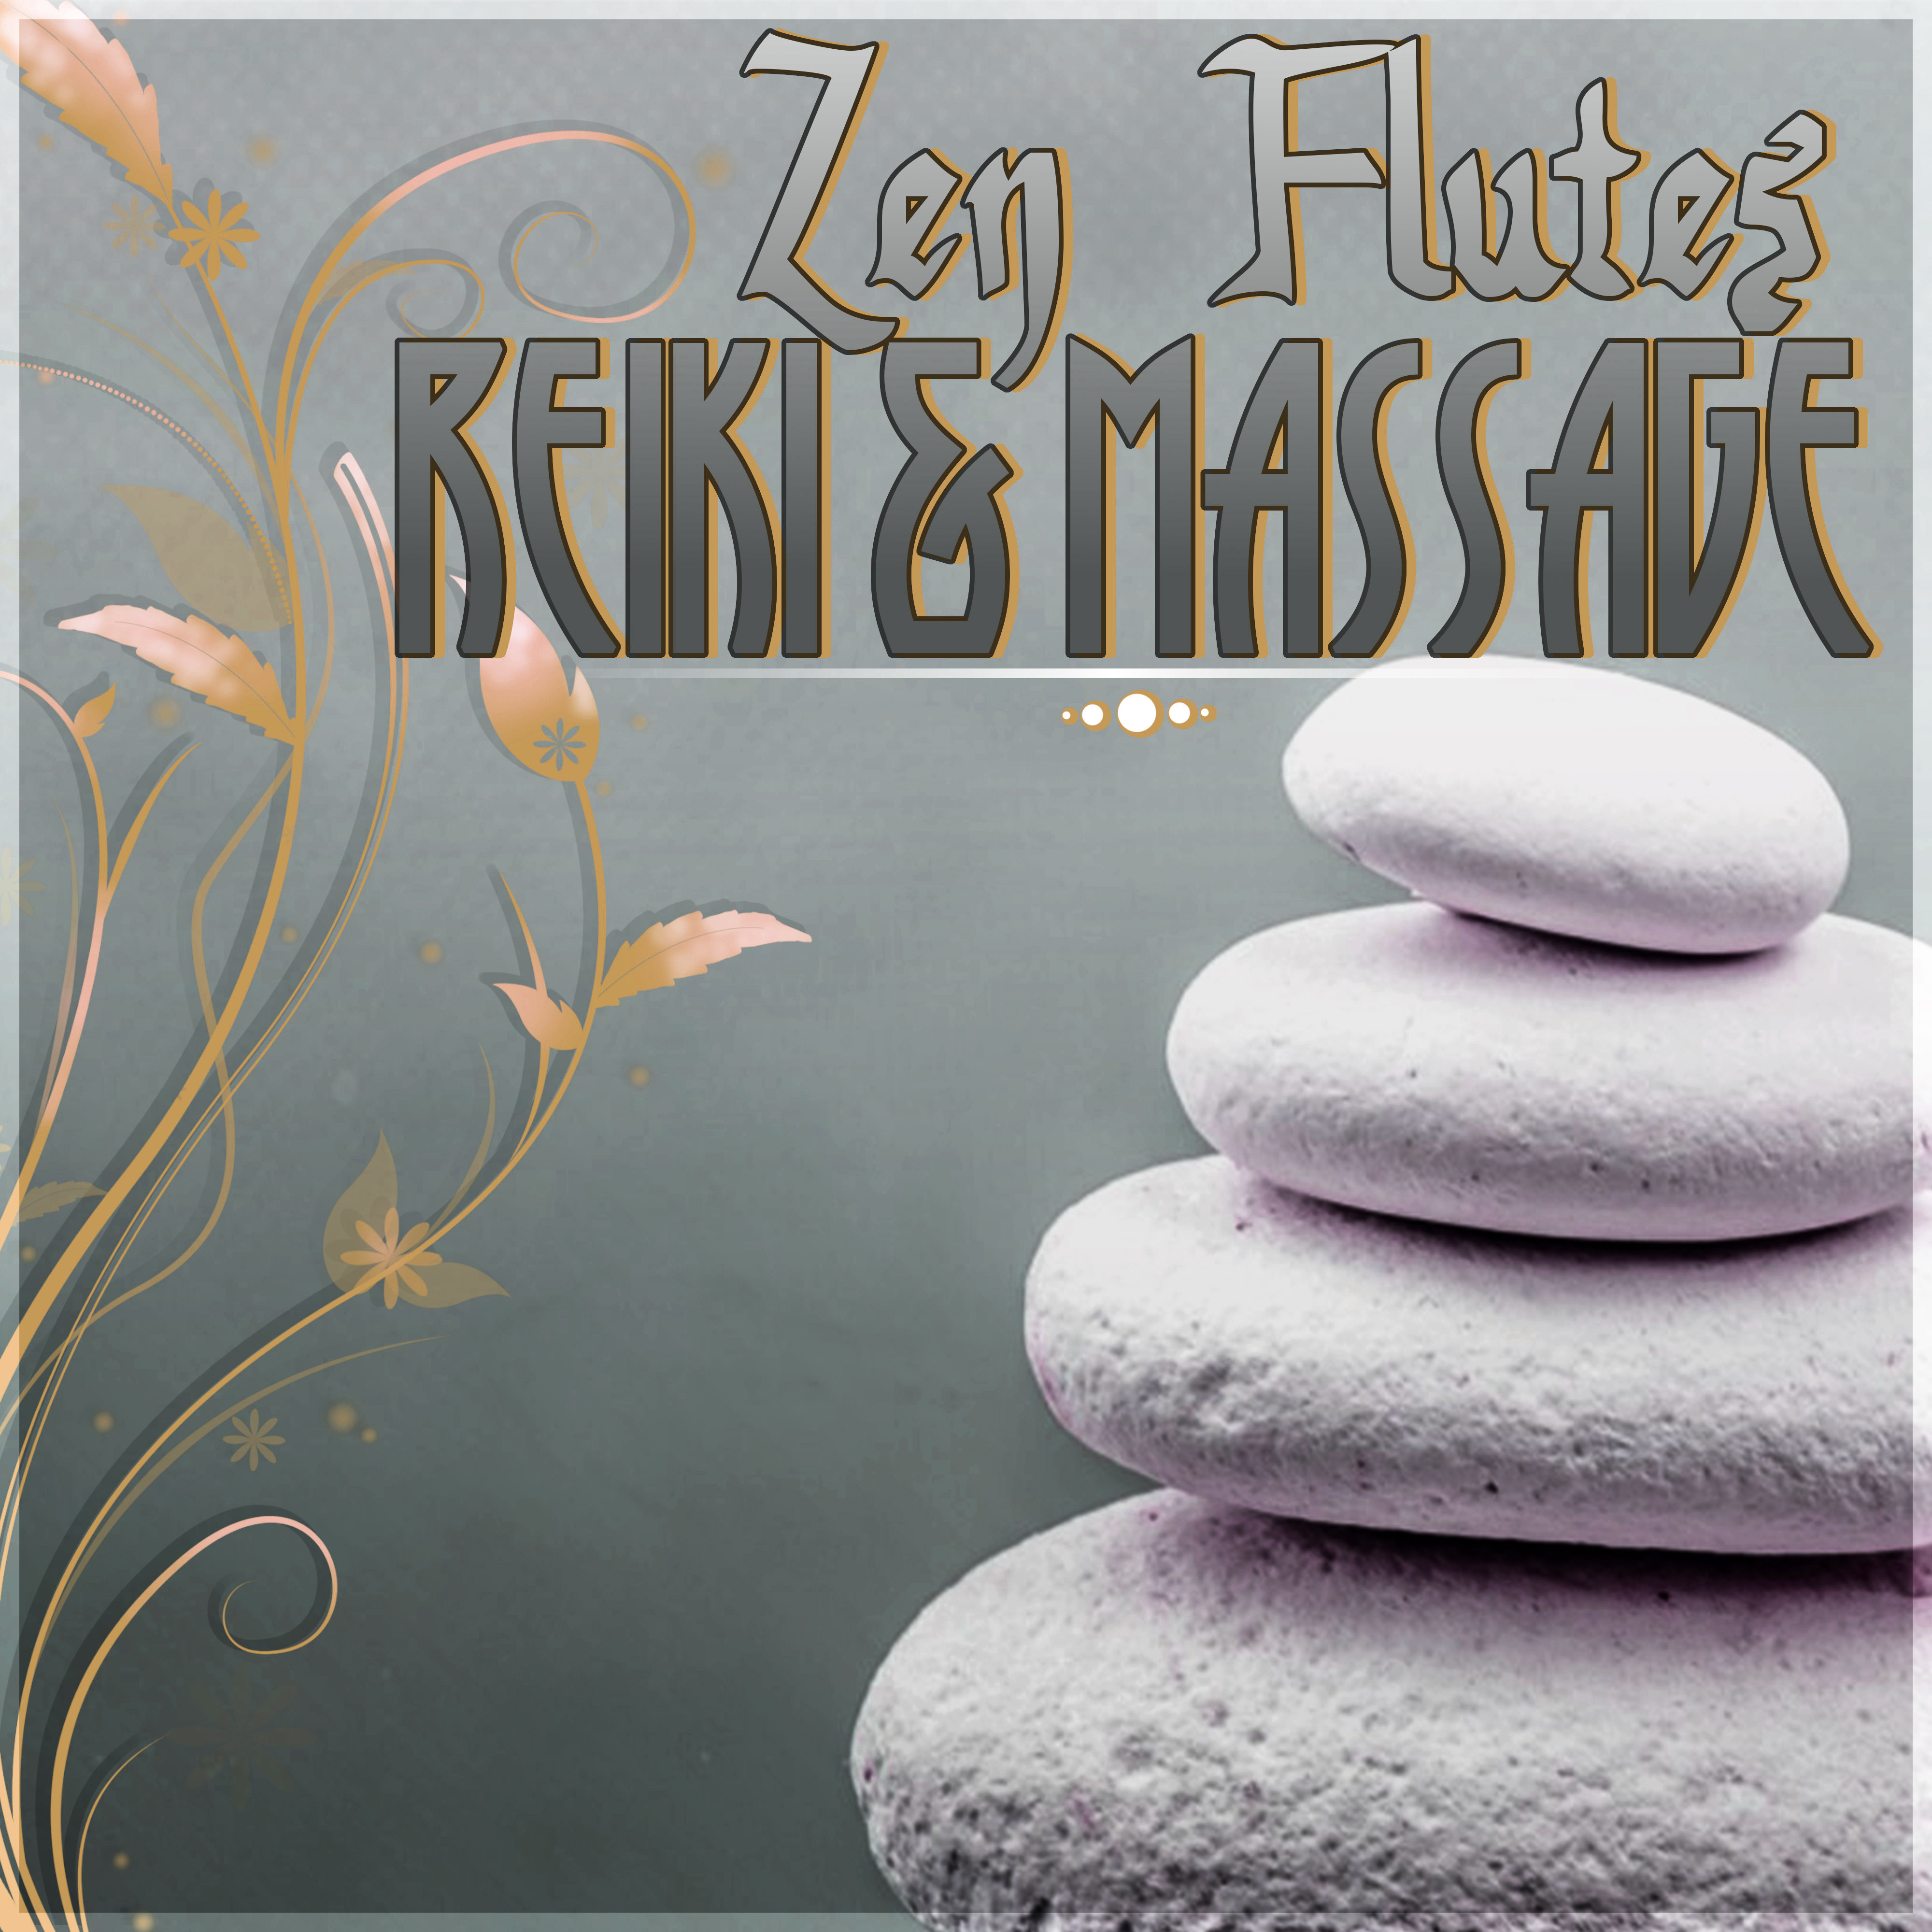 Zen Flutes, Reiki & Massage - Sounds of Nature, New Age, Mindfulness Meditation, Sleep Music and Spa Dreams, Reiki